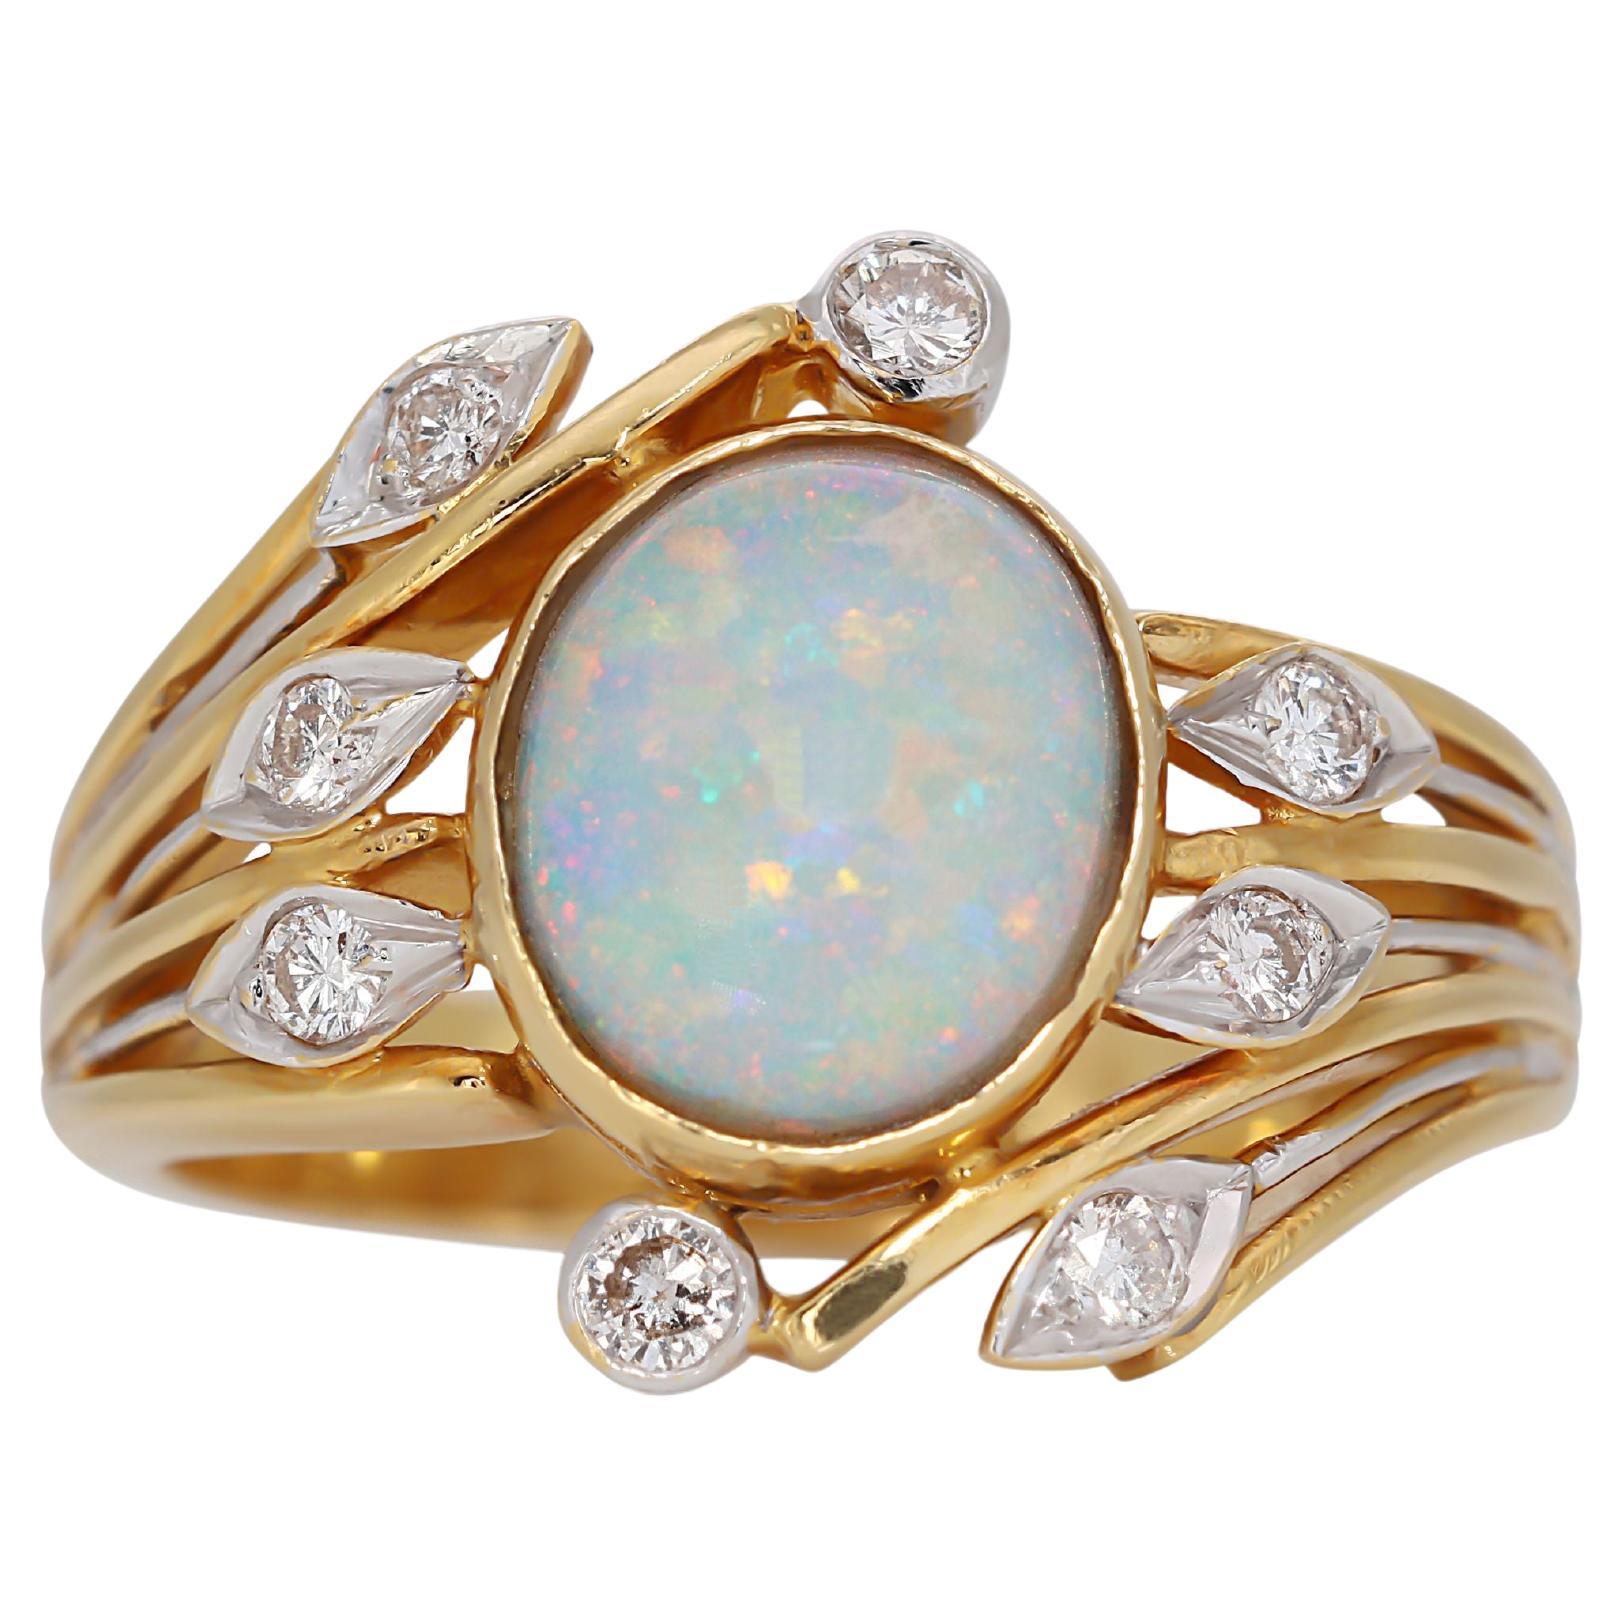  Elegant 20K Yellow Gold Opal Diamond Ring w/ 0.12 ct Natural Diamonds NGI Cert